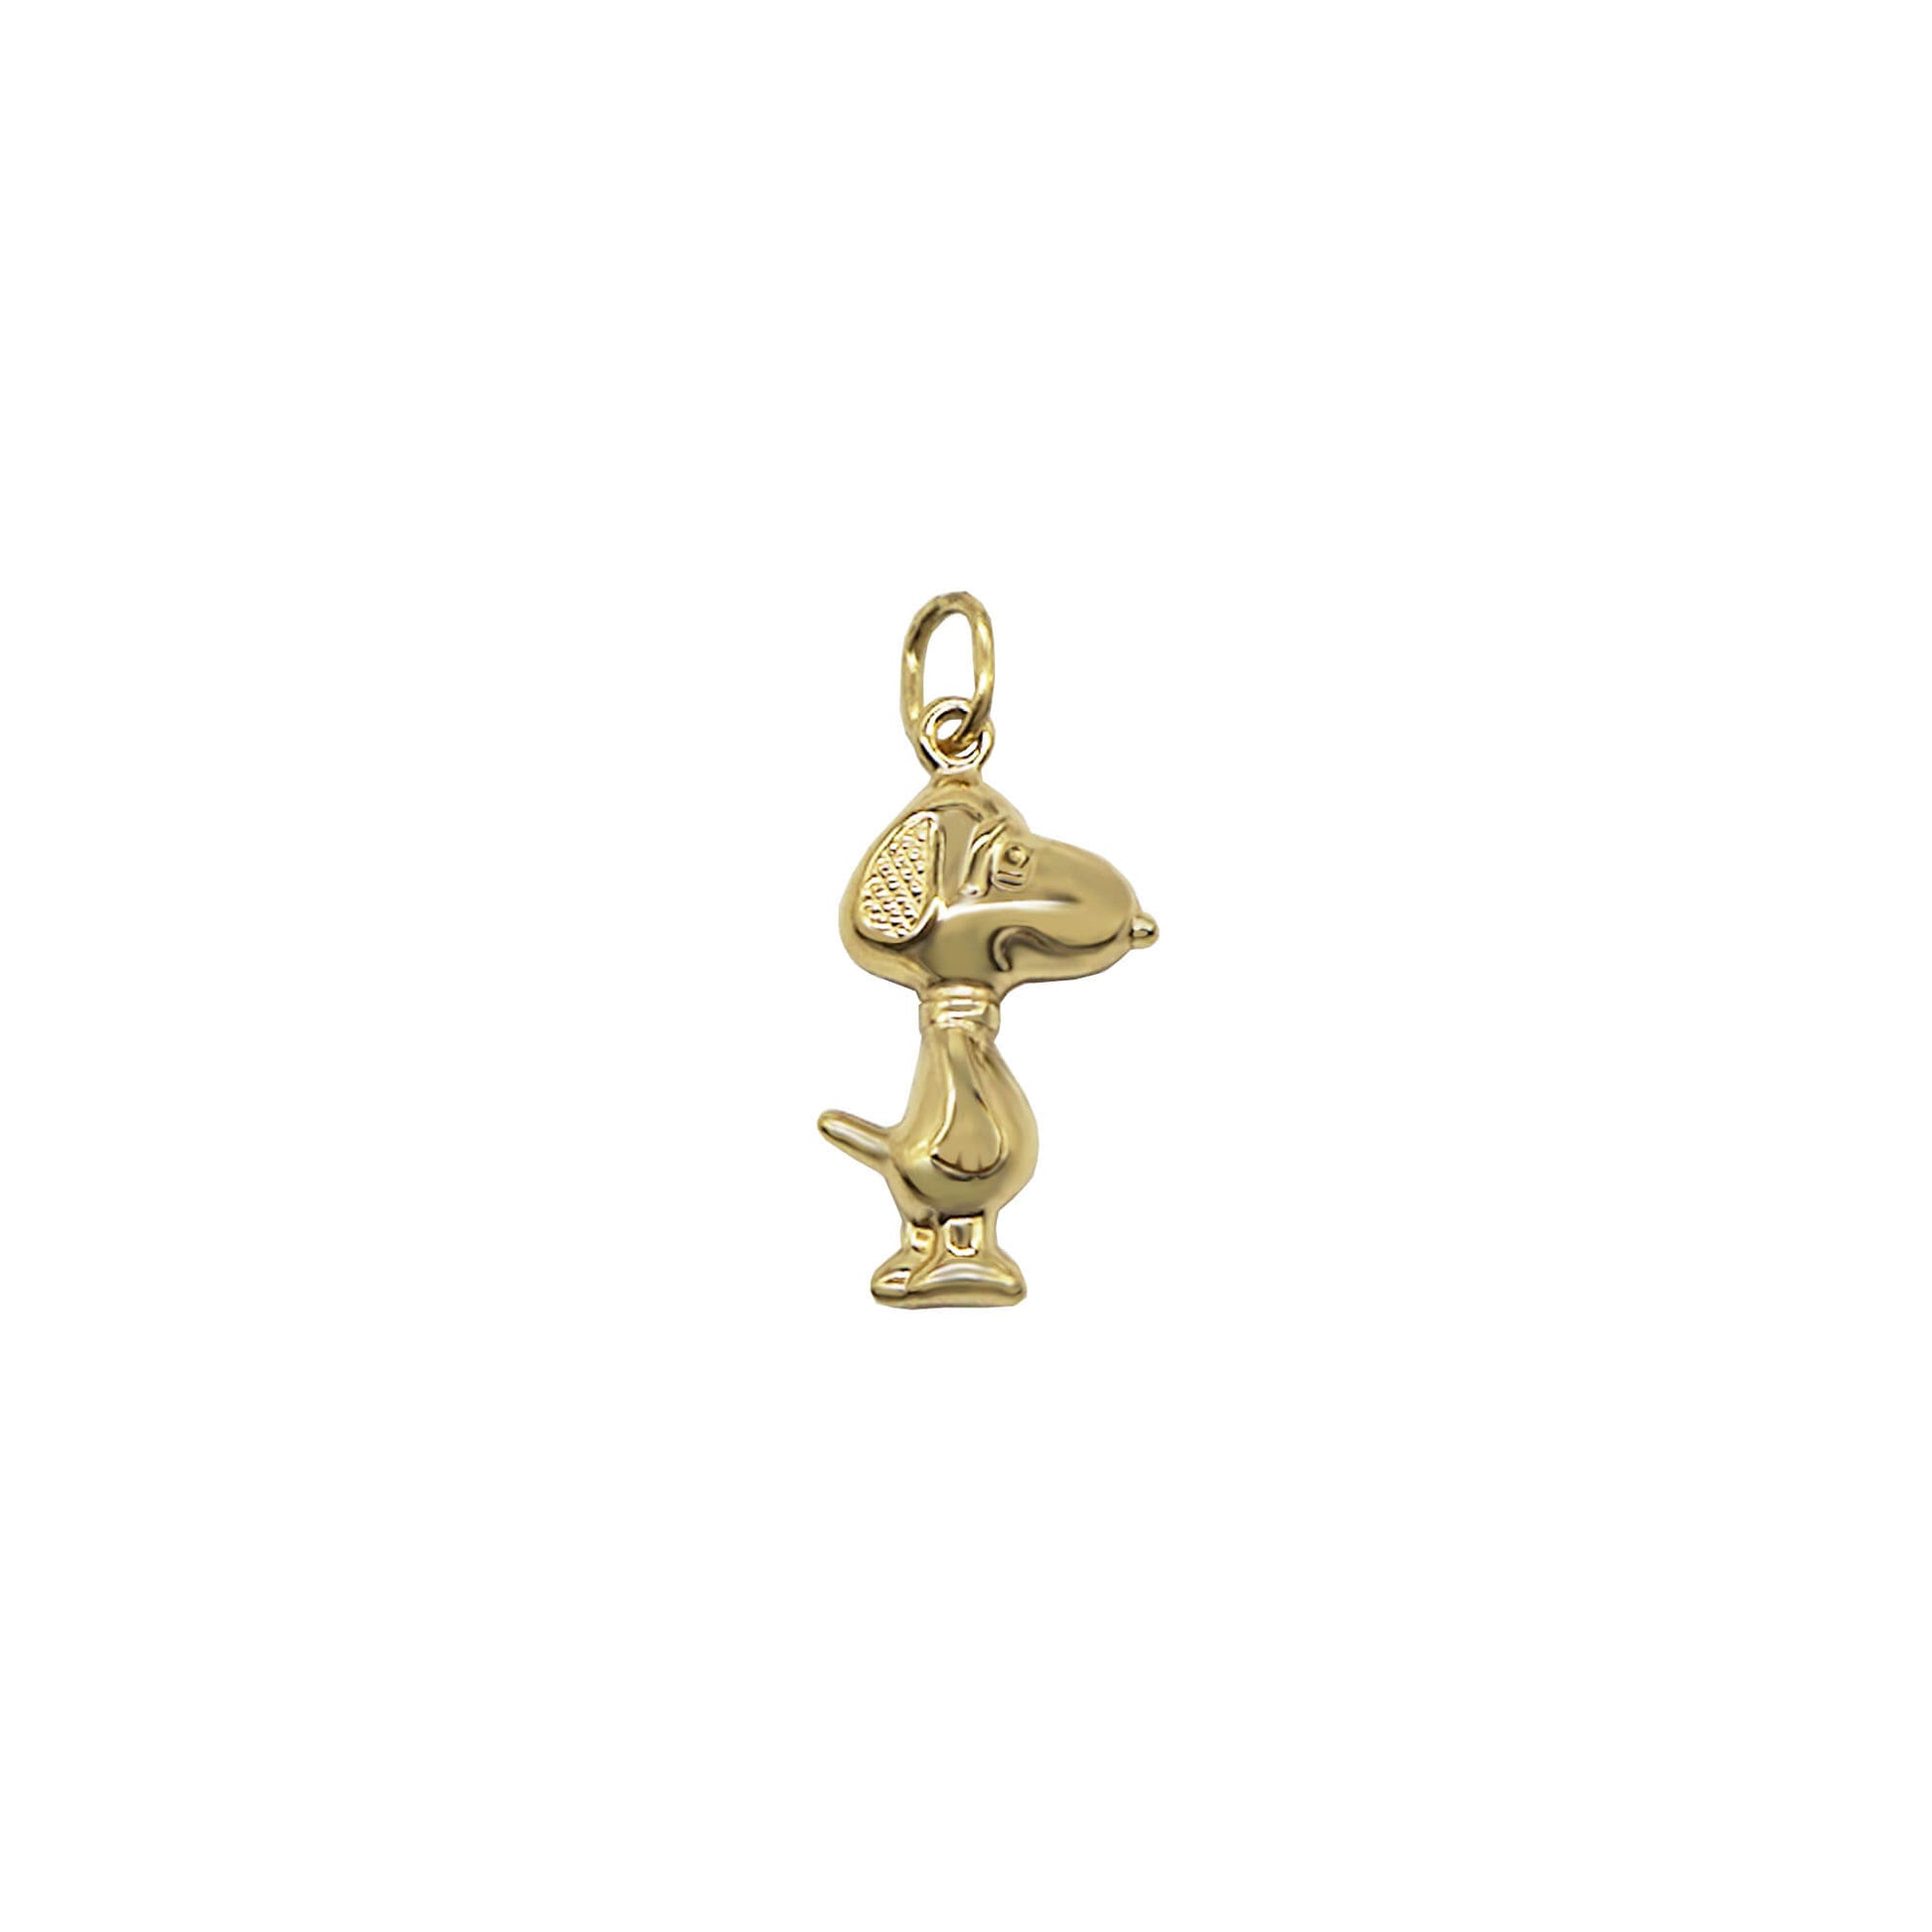 9k gold snoopy charm pendant.